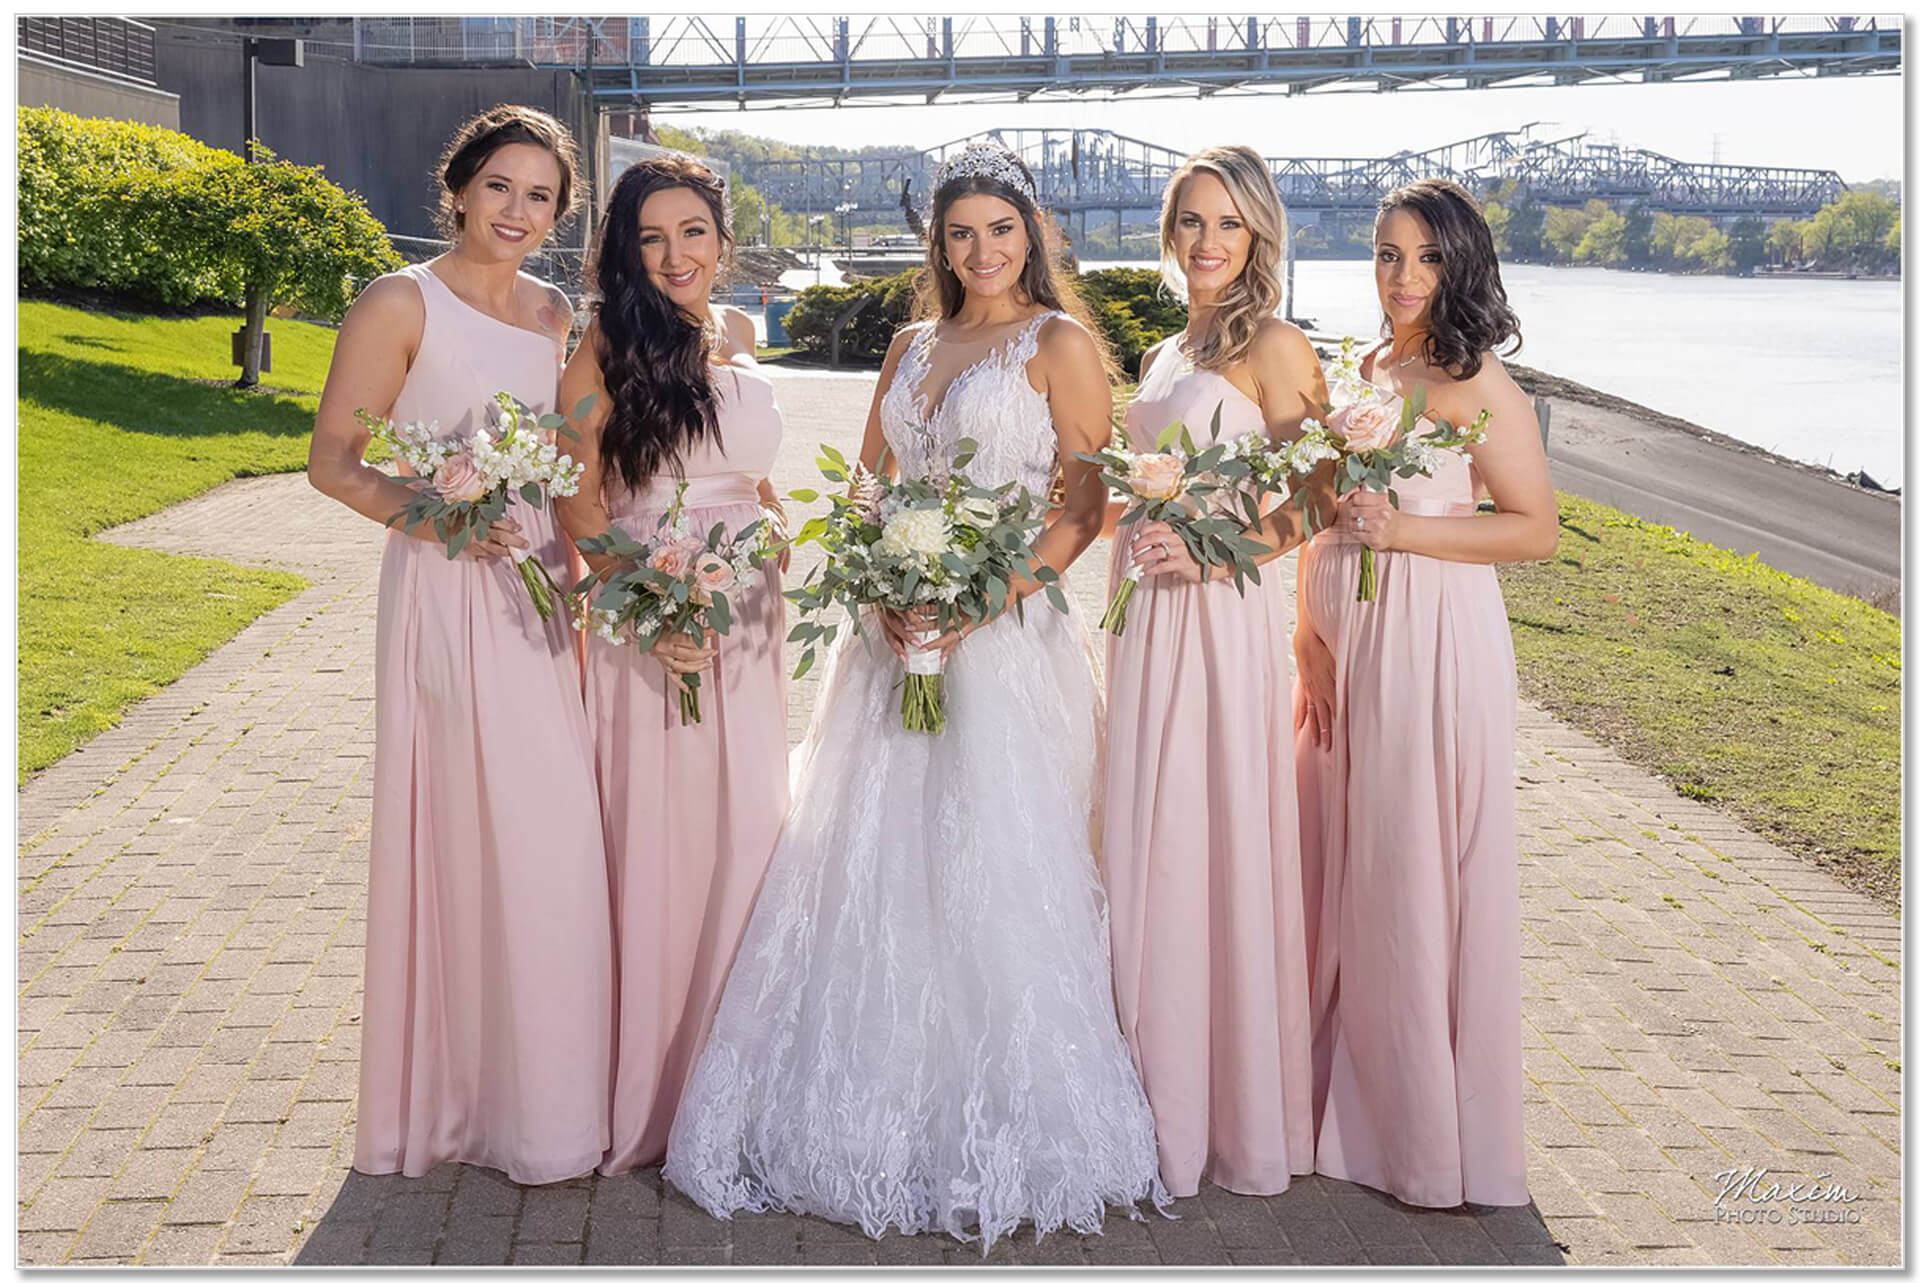 Roebling Bridge Cincinnati wedding bridesmaids pictures